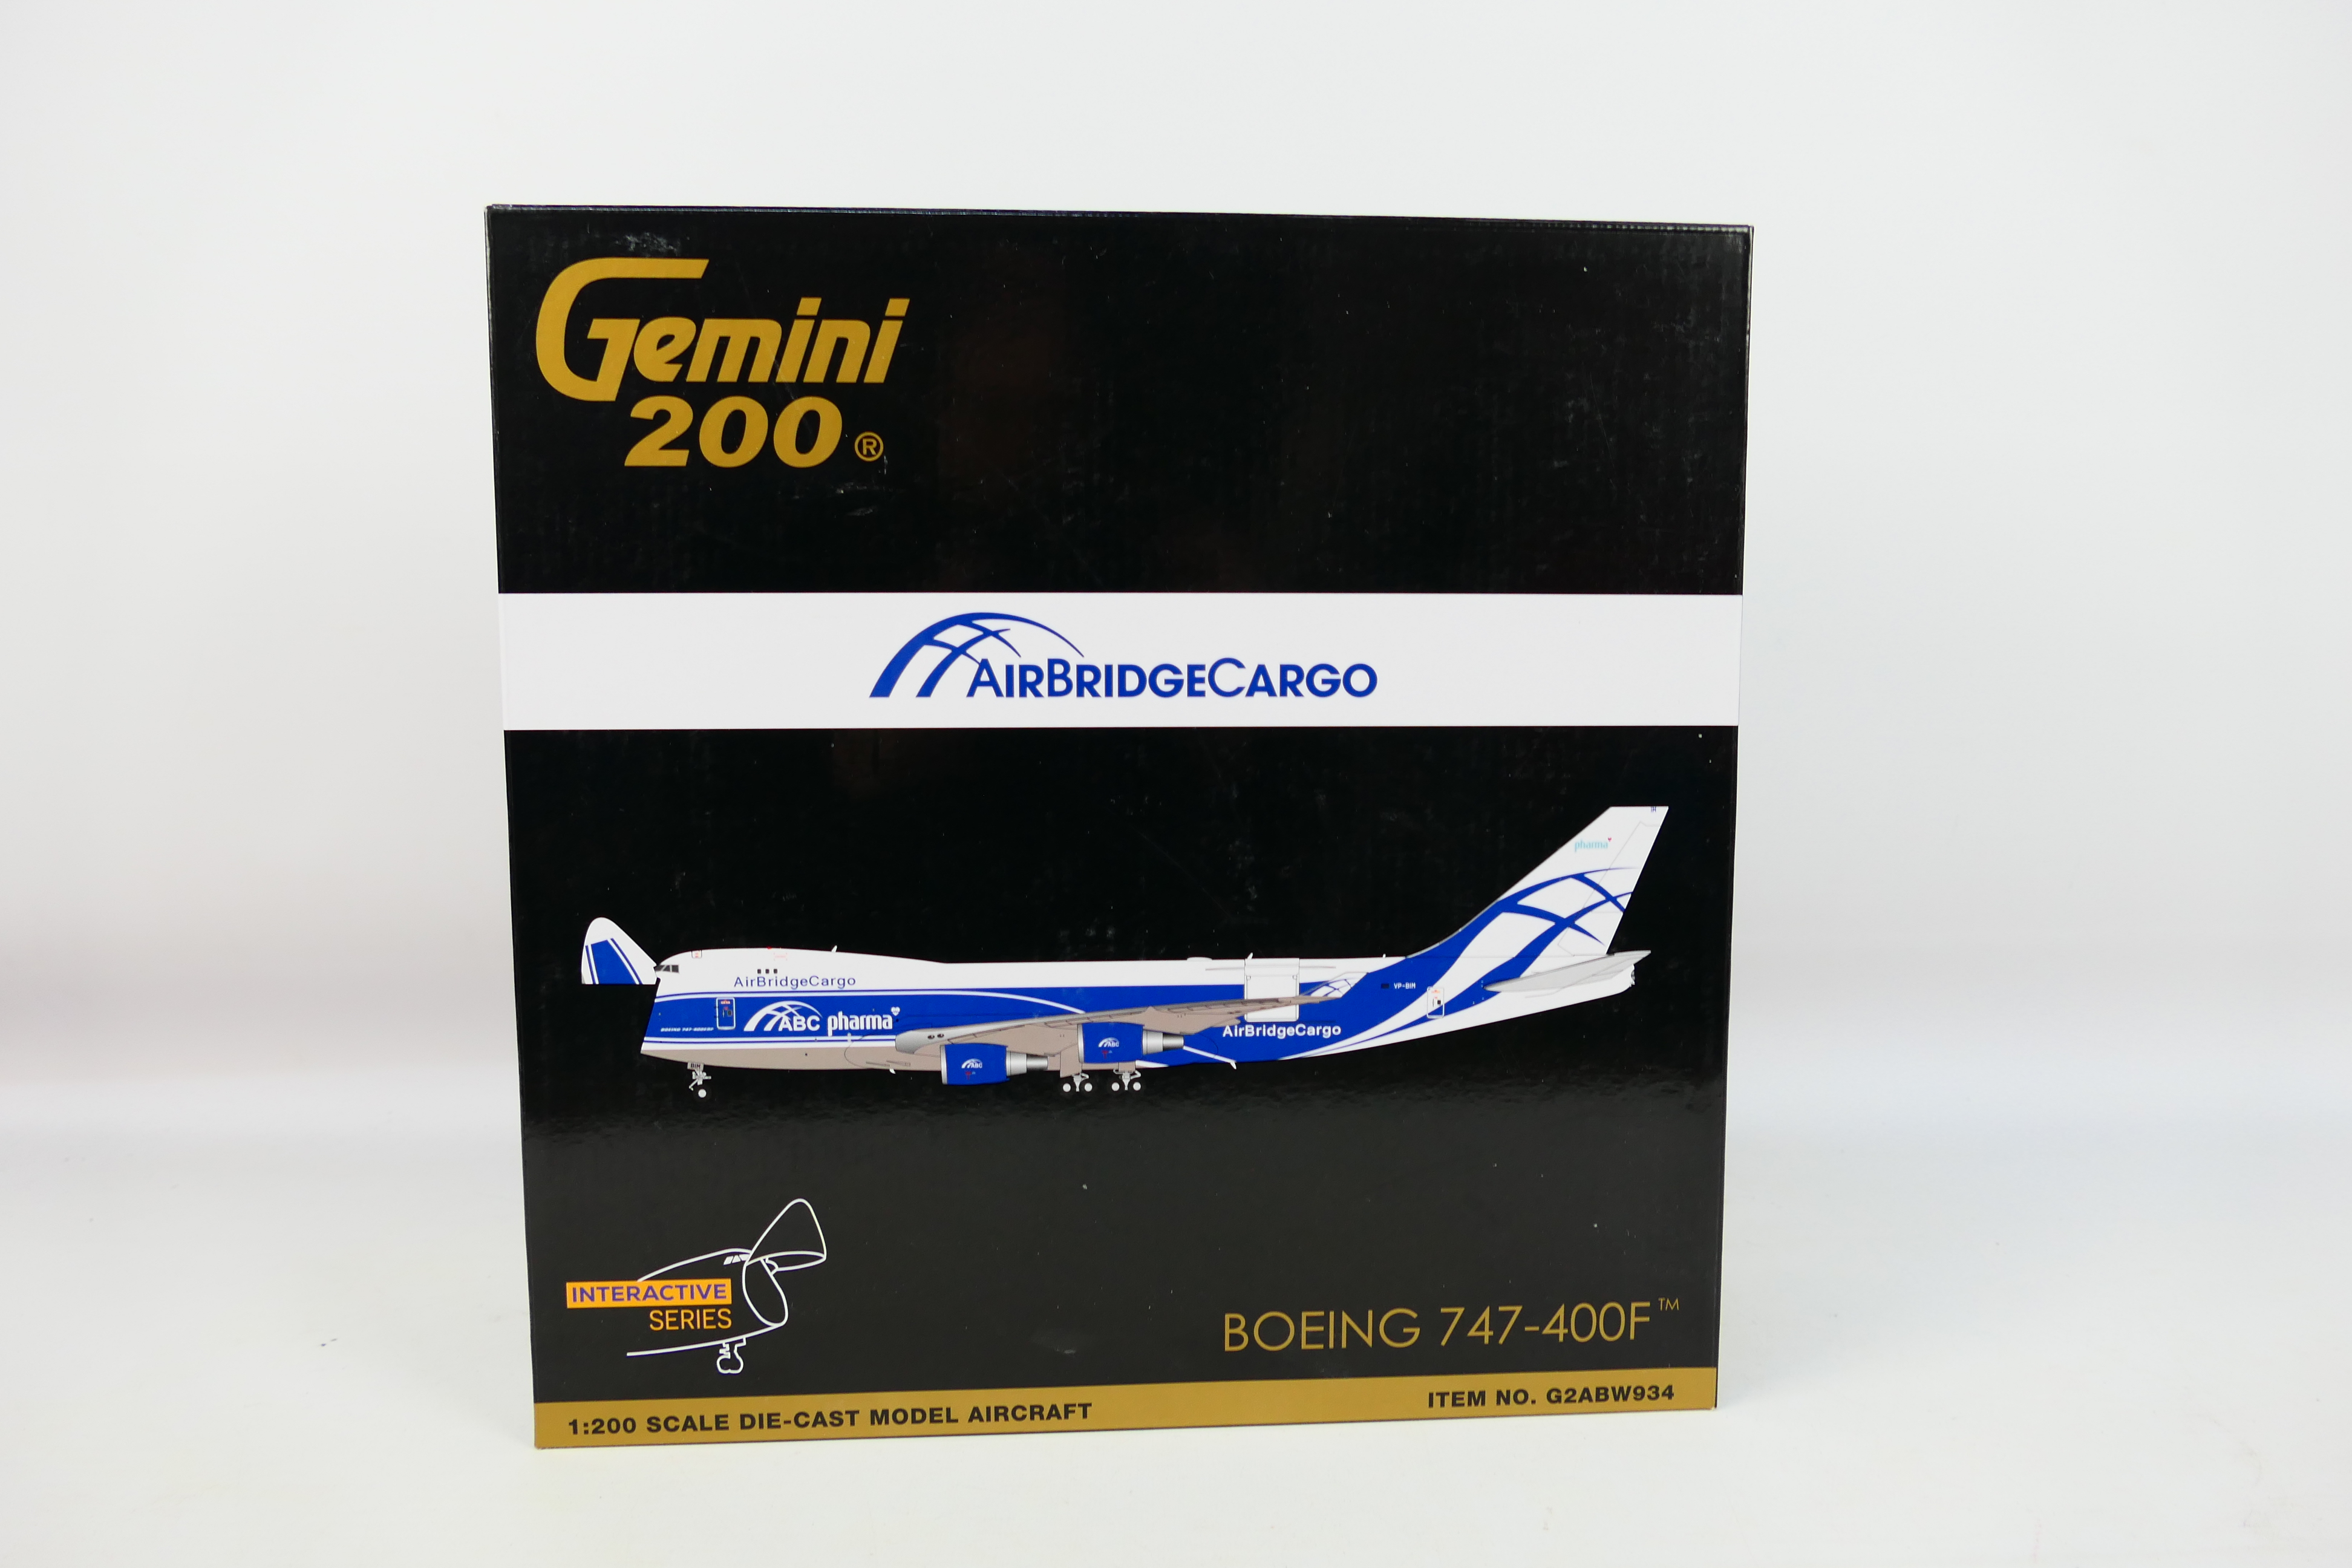 Gemini 200 - A boxed 1:200 scale Boeing 747-400F Air Bridge Cargo model in ABC Pharma livery #